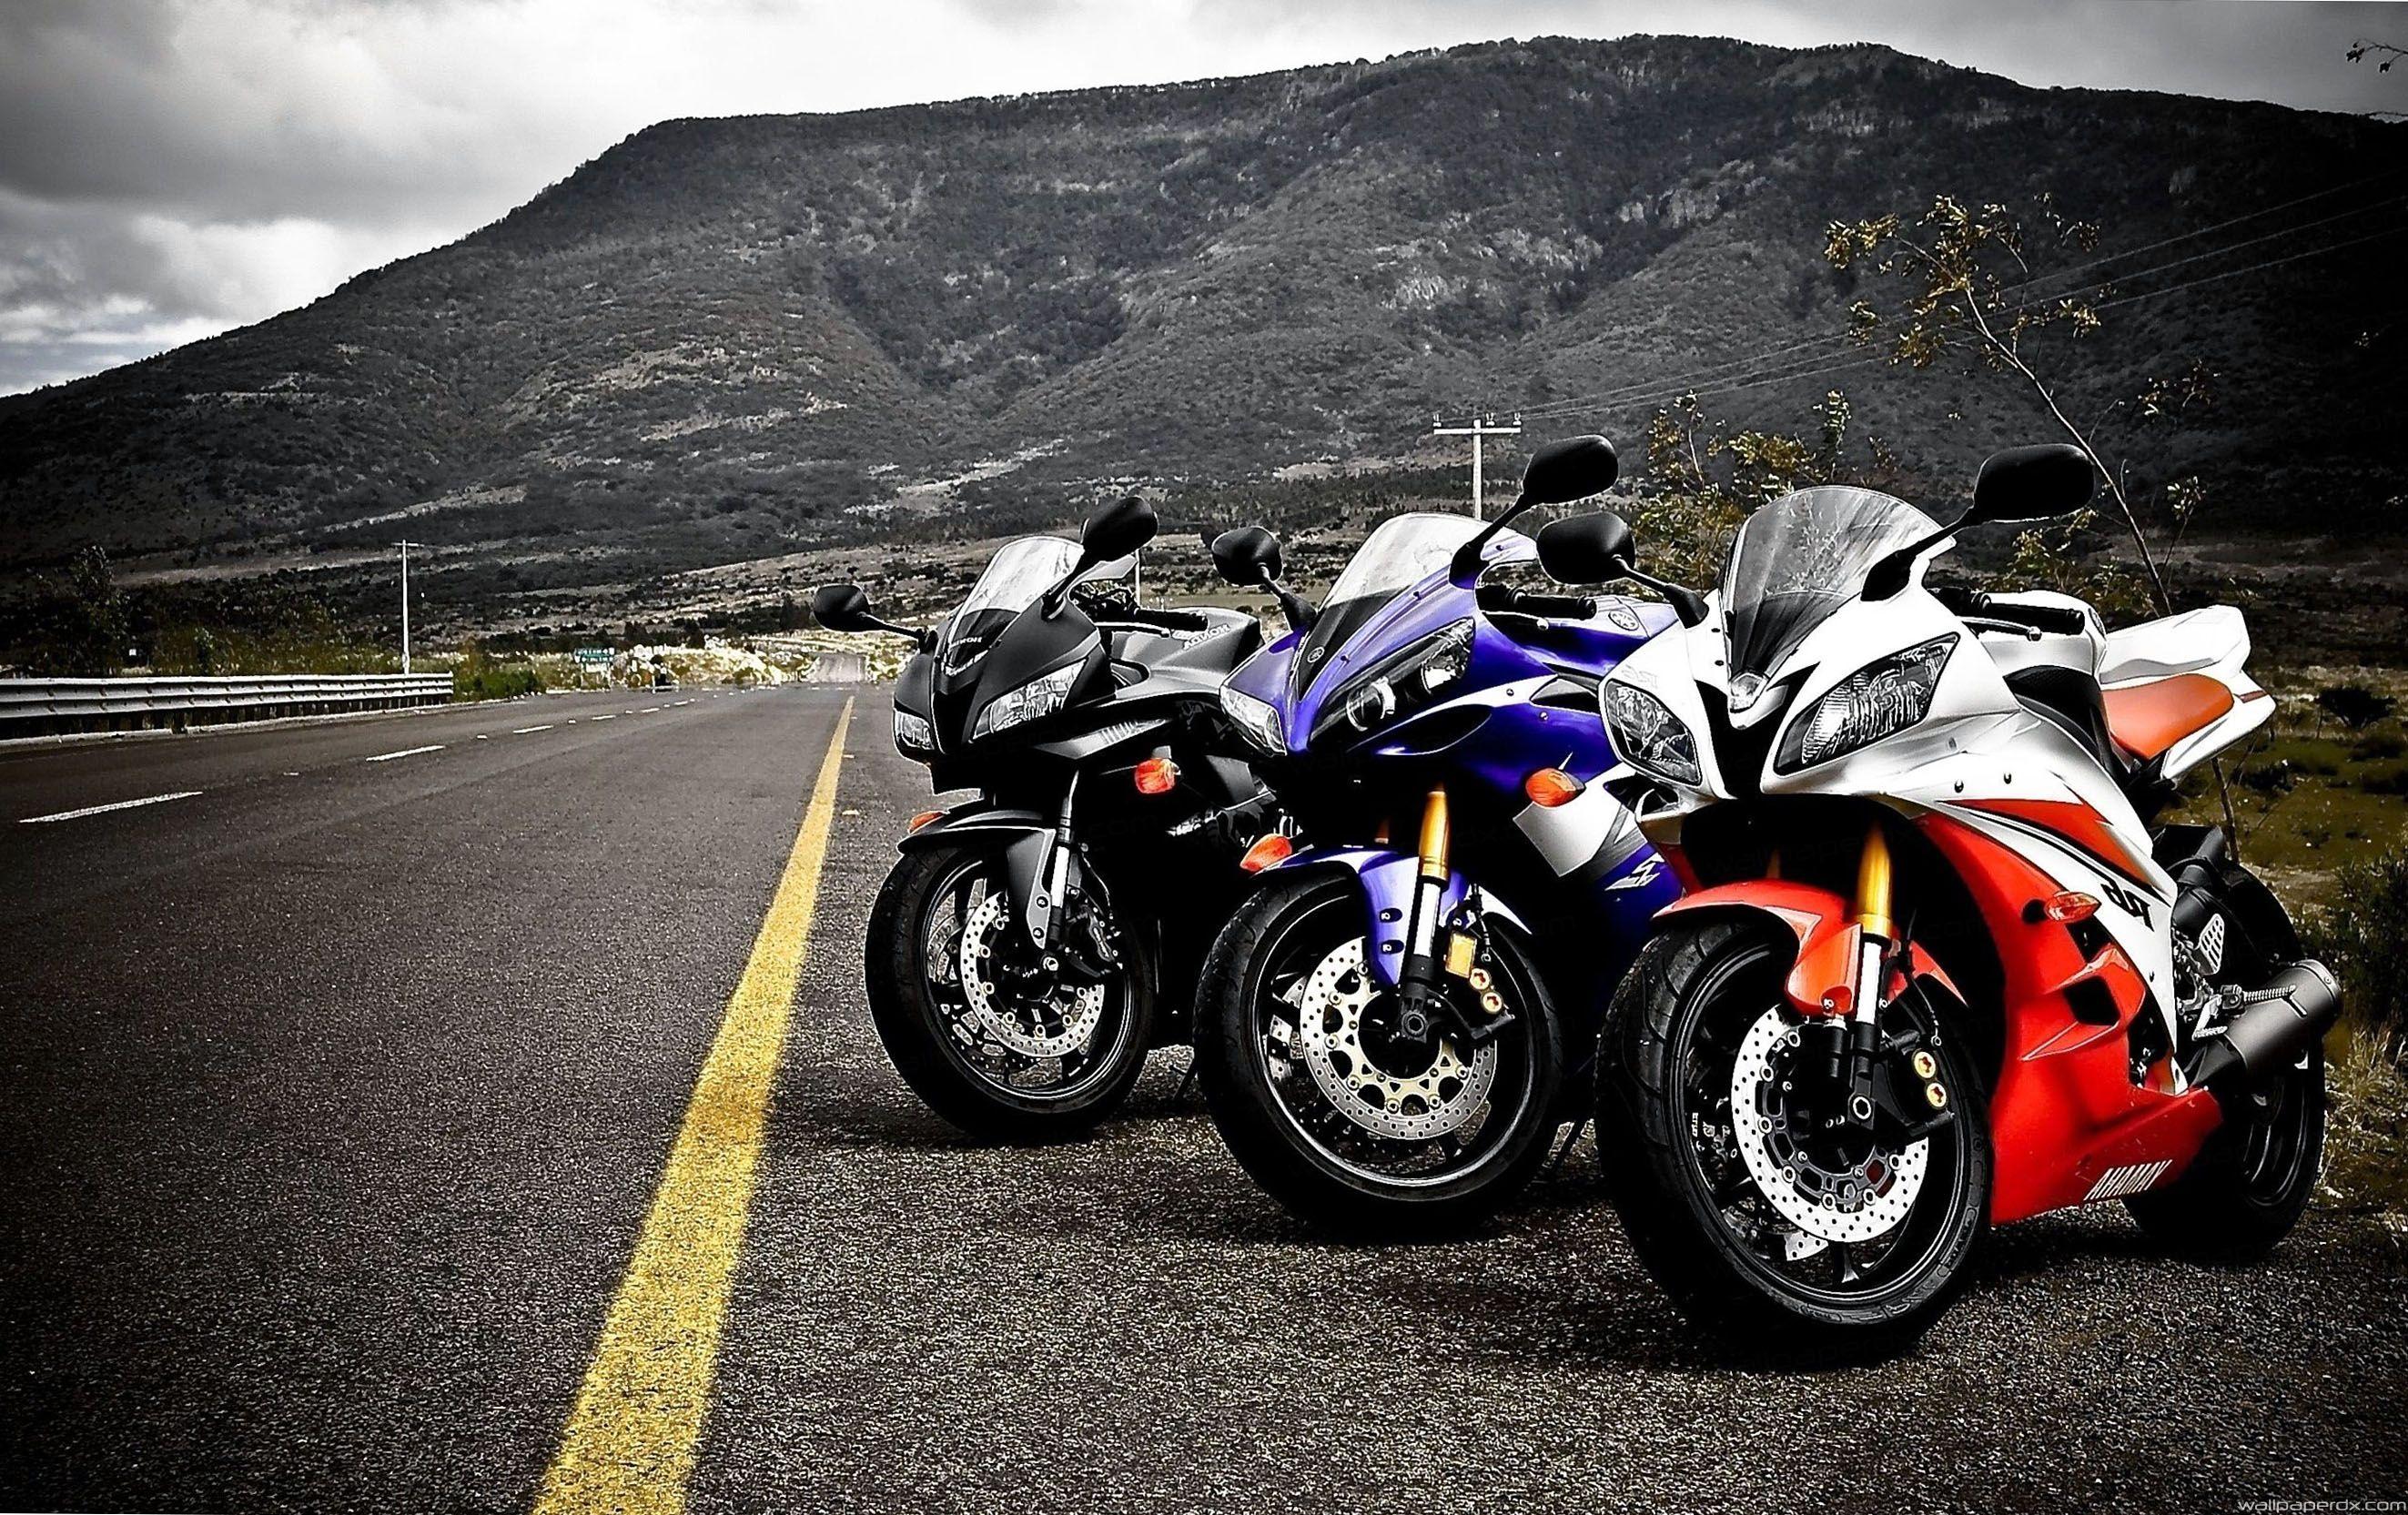 yamaha superbikes wide full HD wallpaper.com.. Best